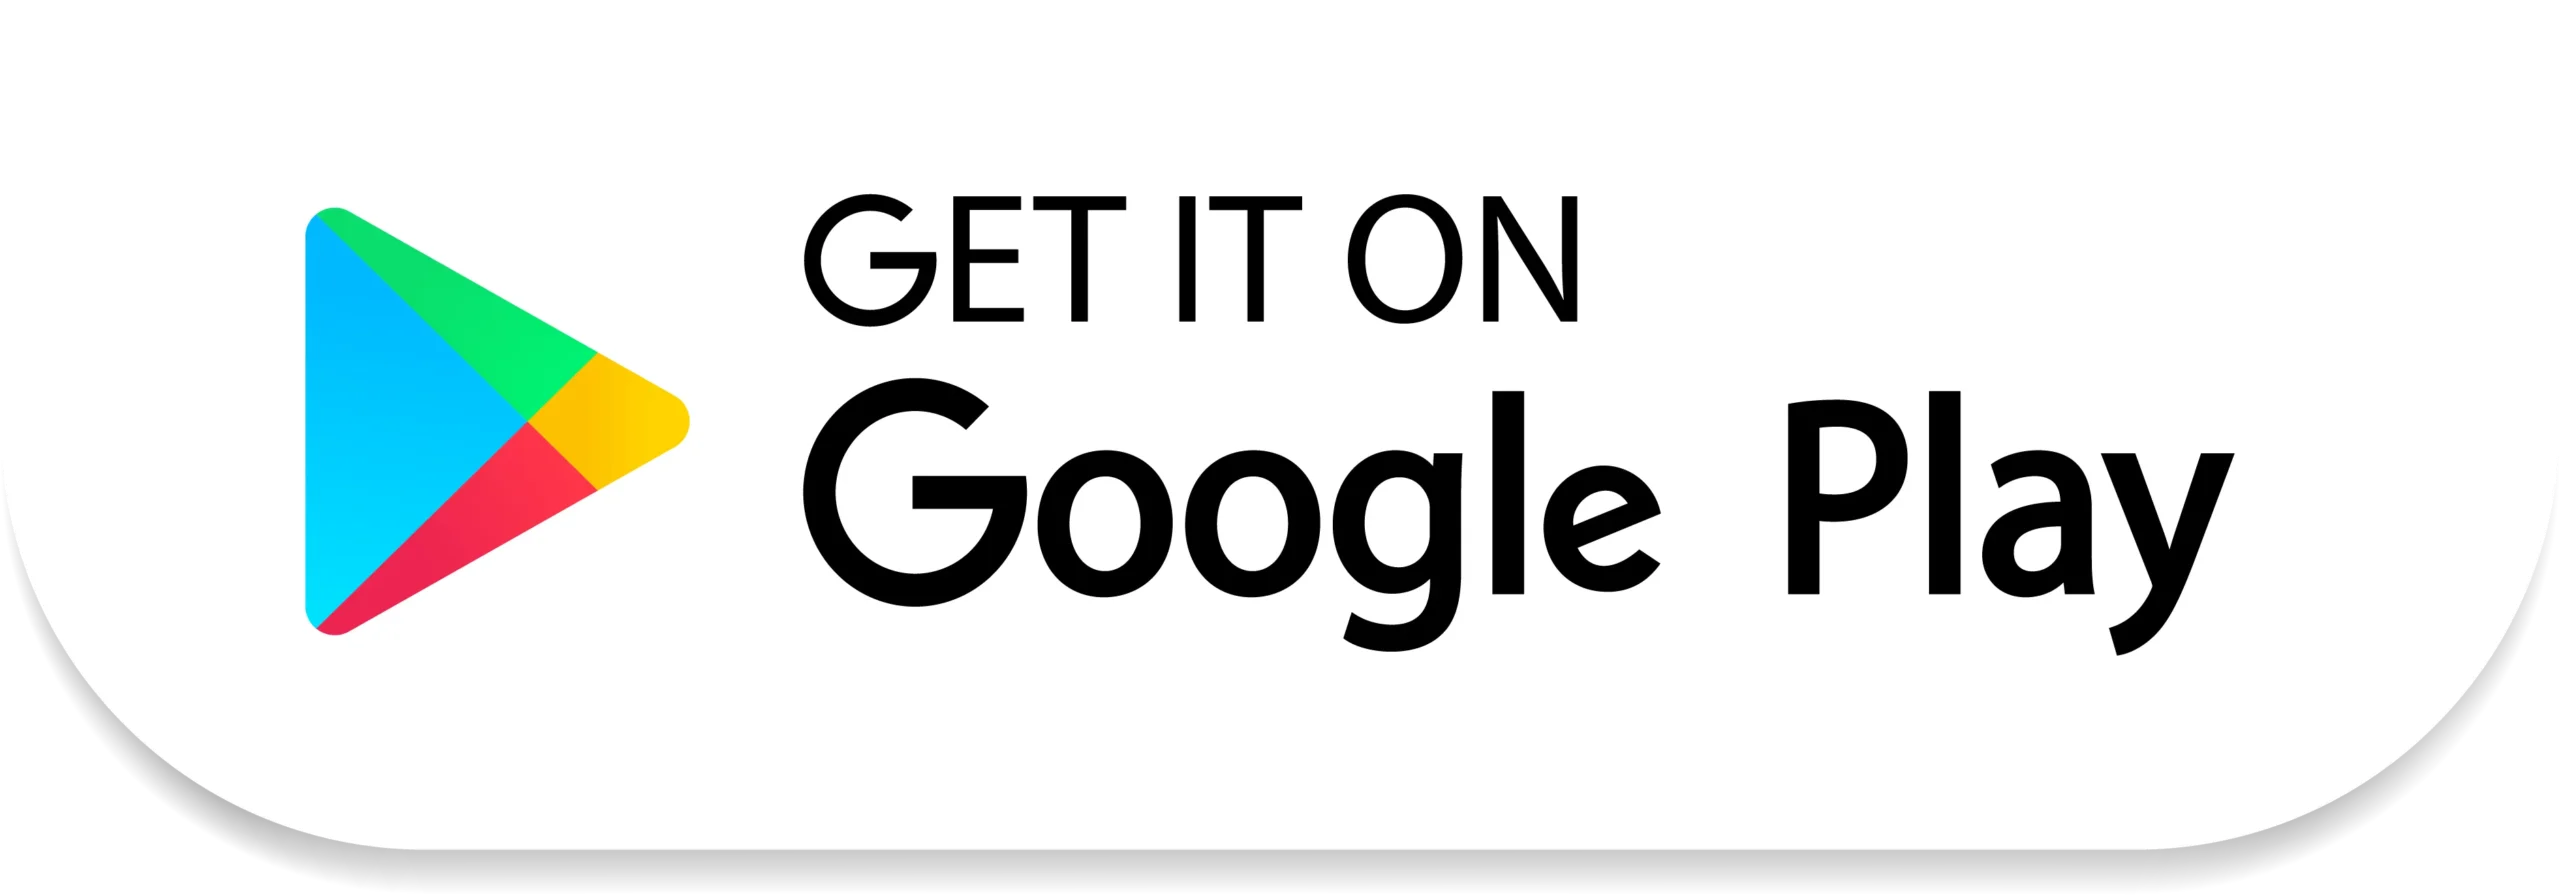 (icon) google play logo, get it on google play